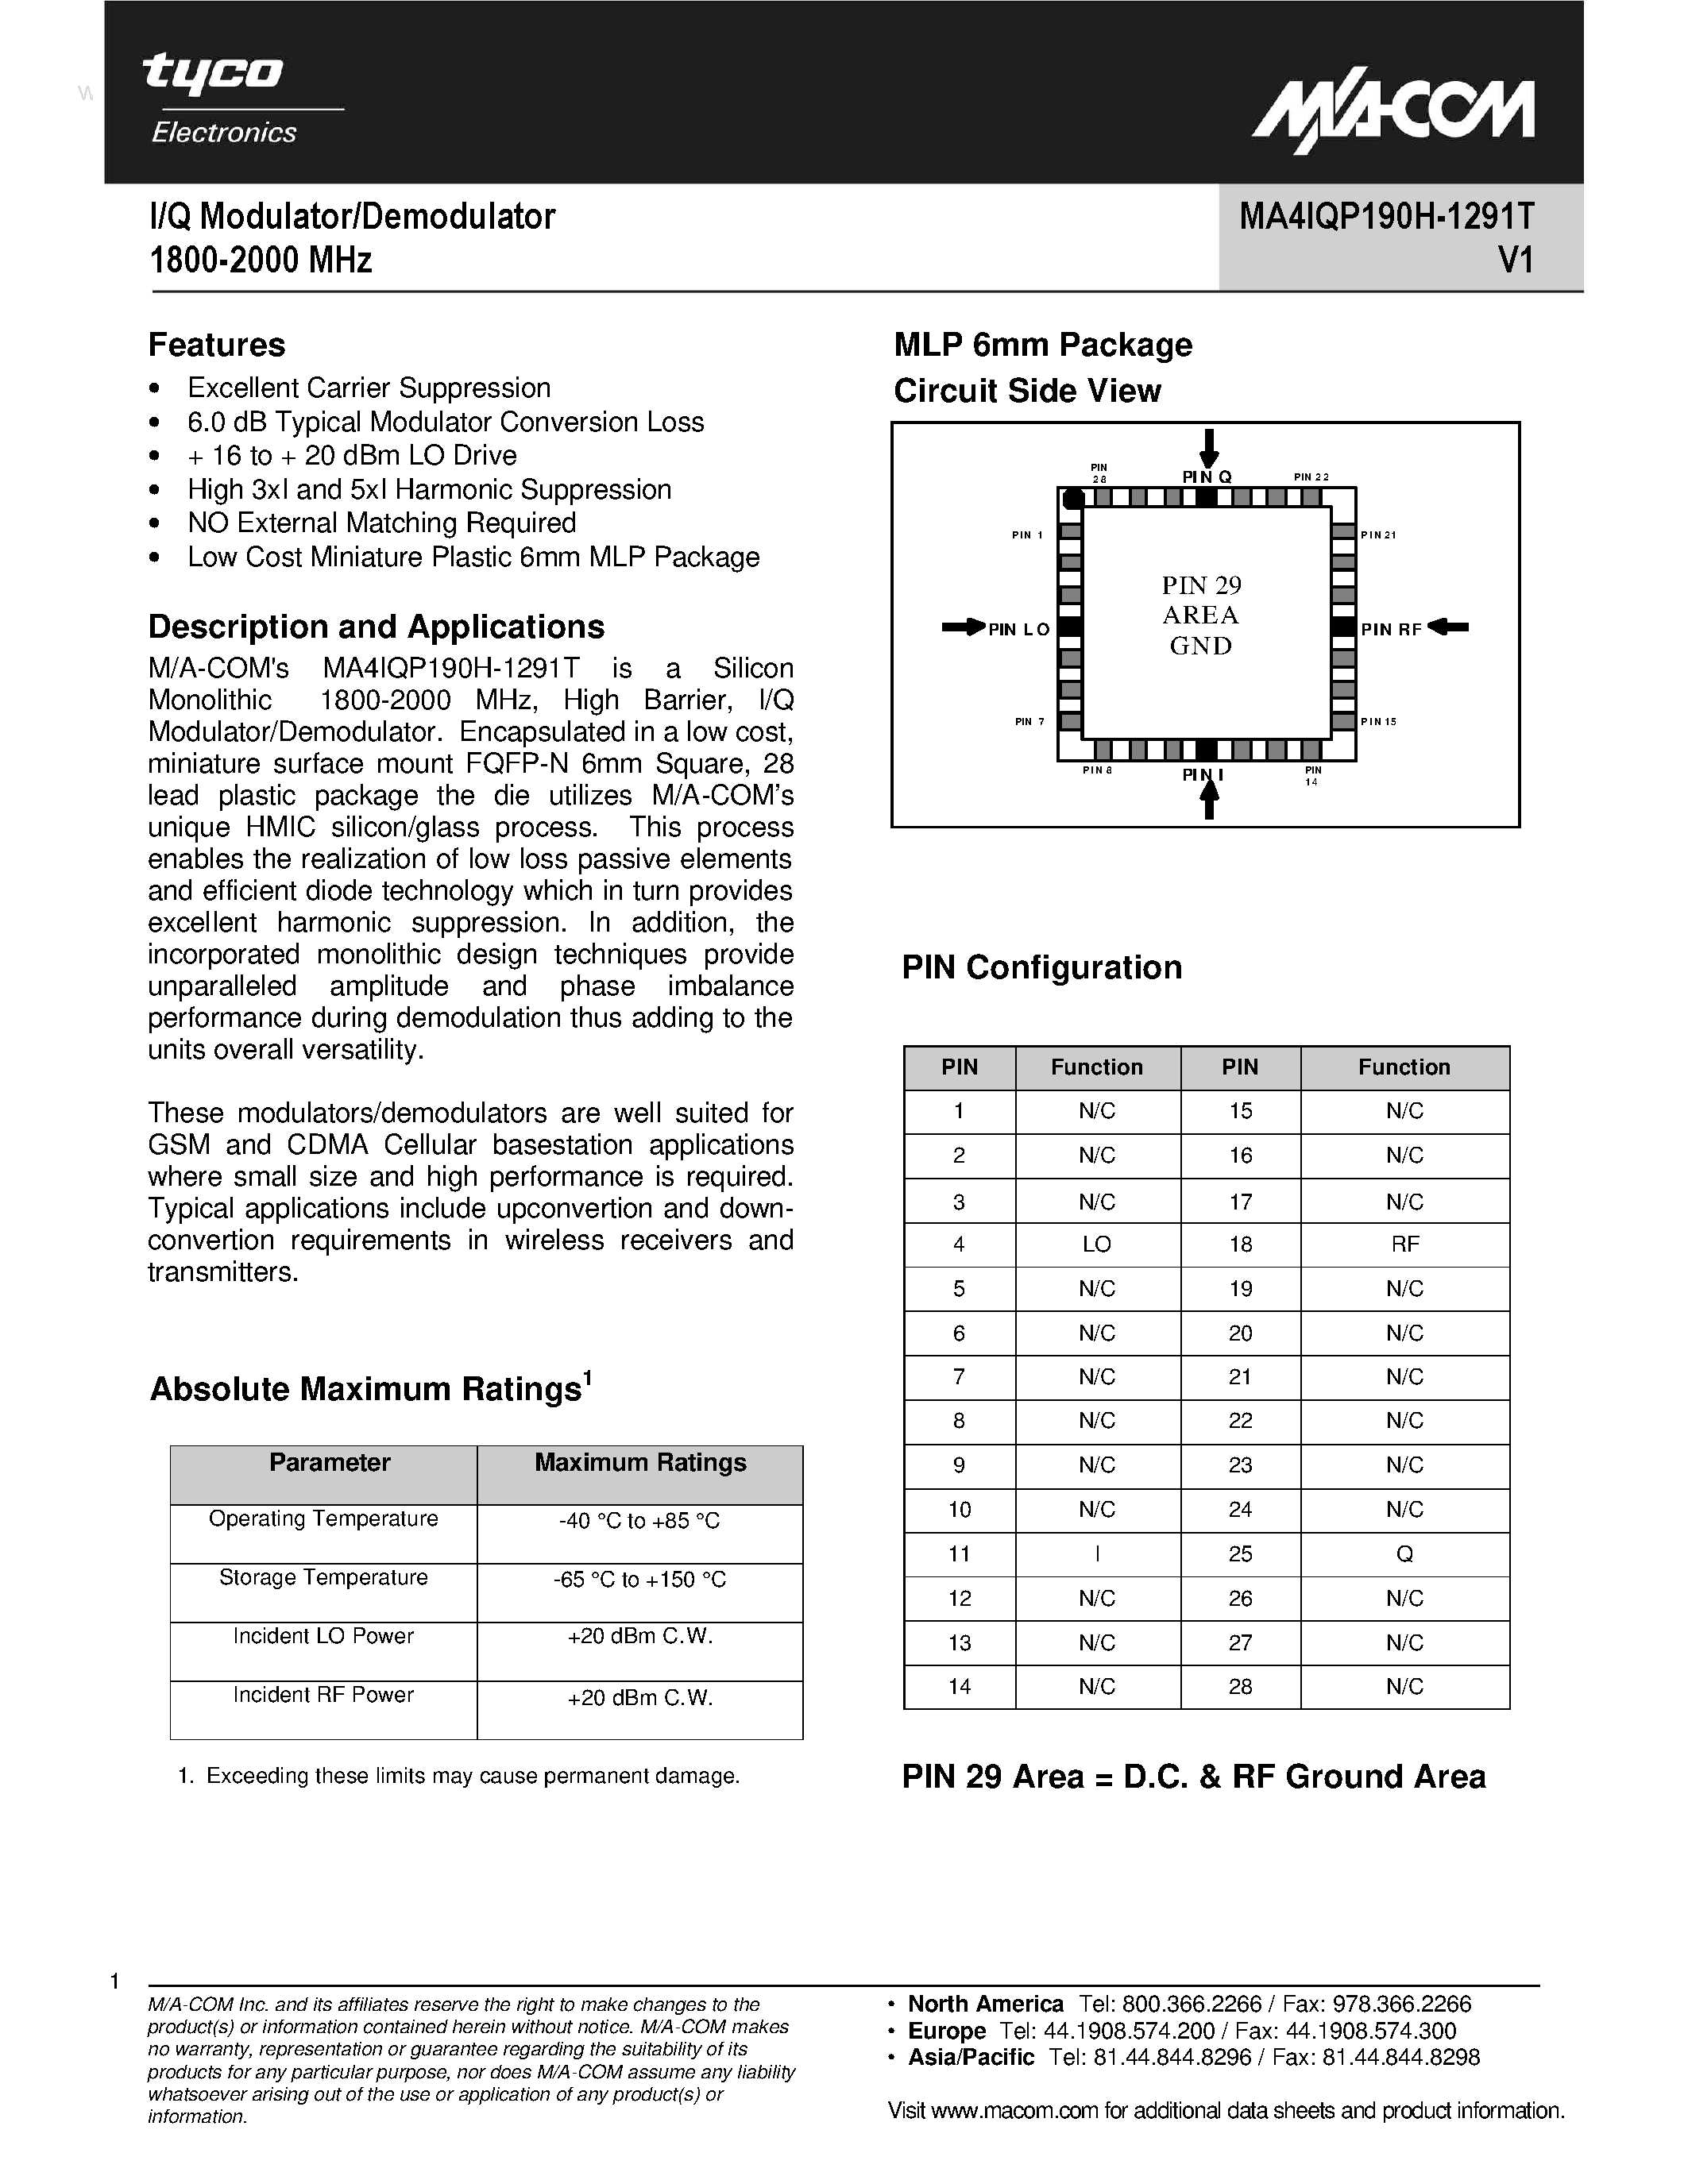 Datasheet MA4IQP190H-1291T - I/Q Modulator/Demodulator page 1